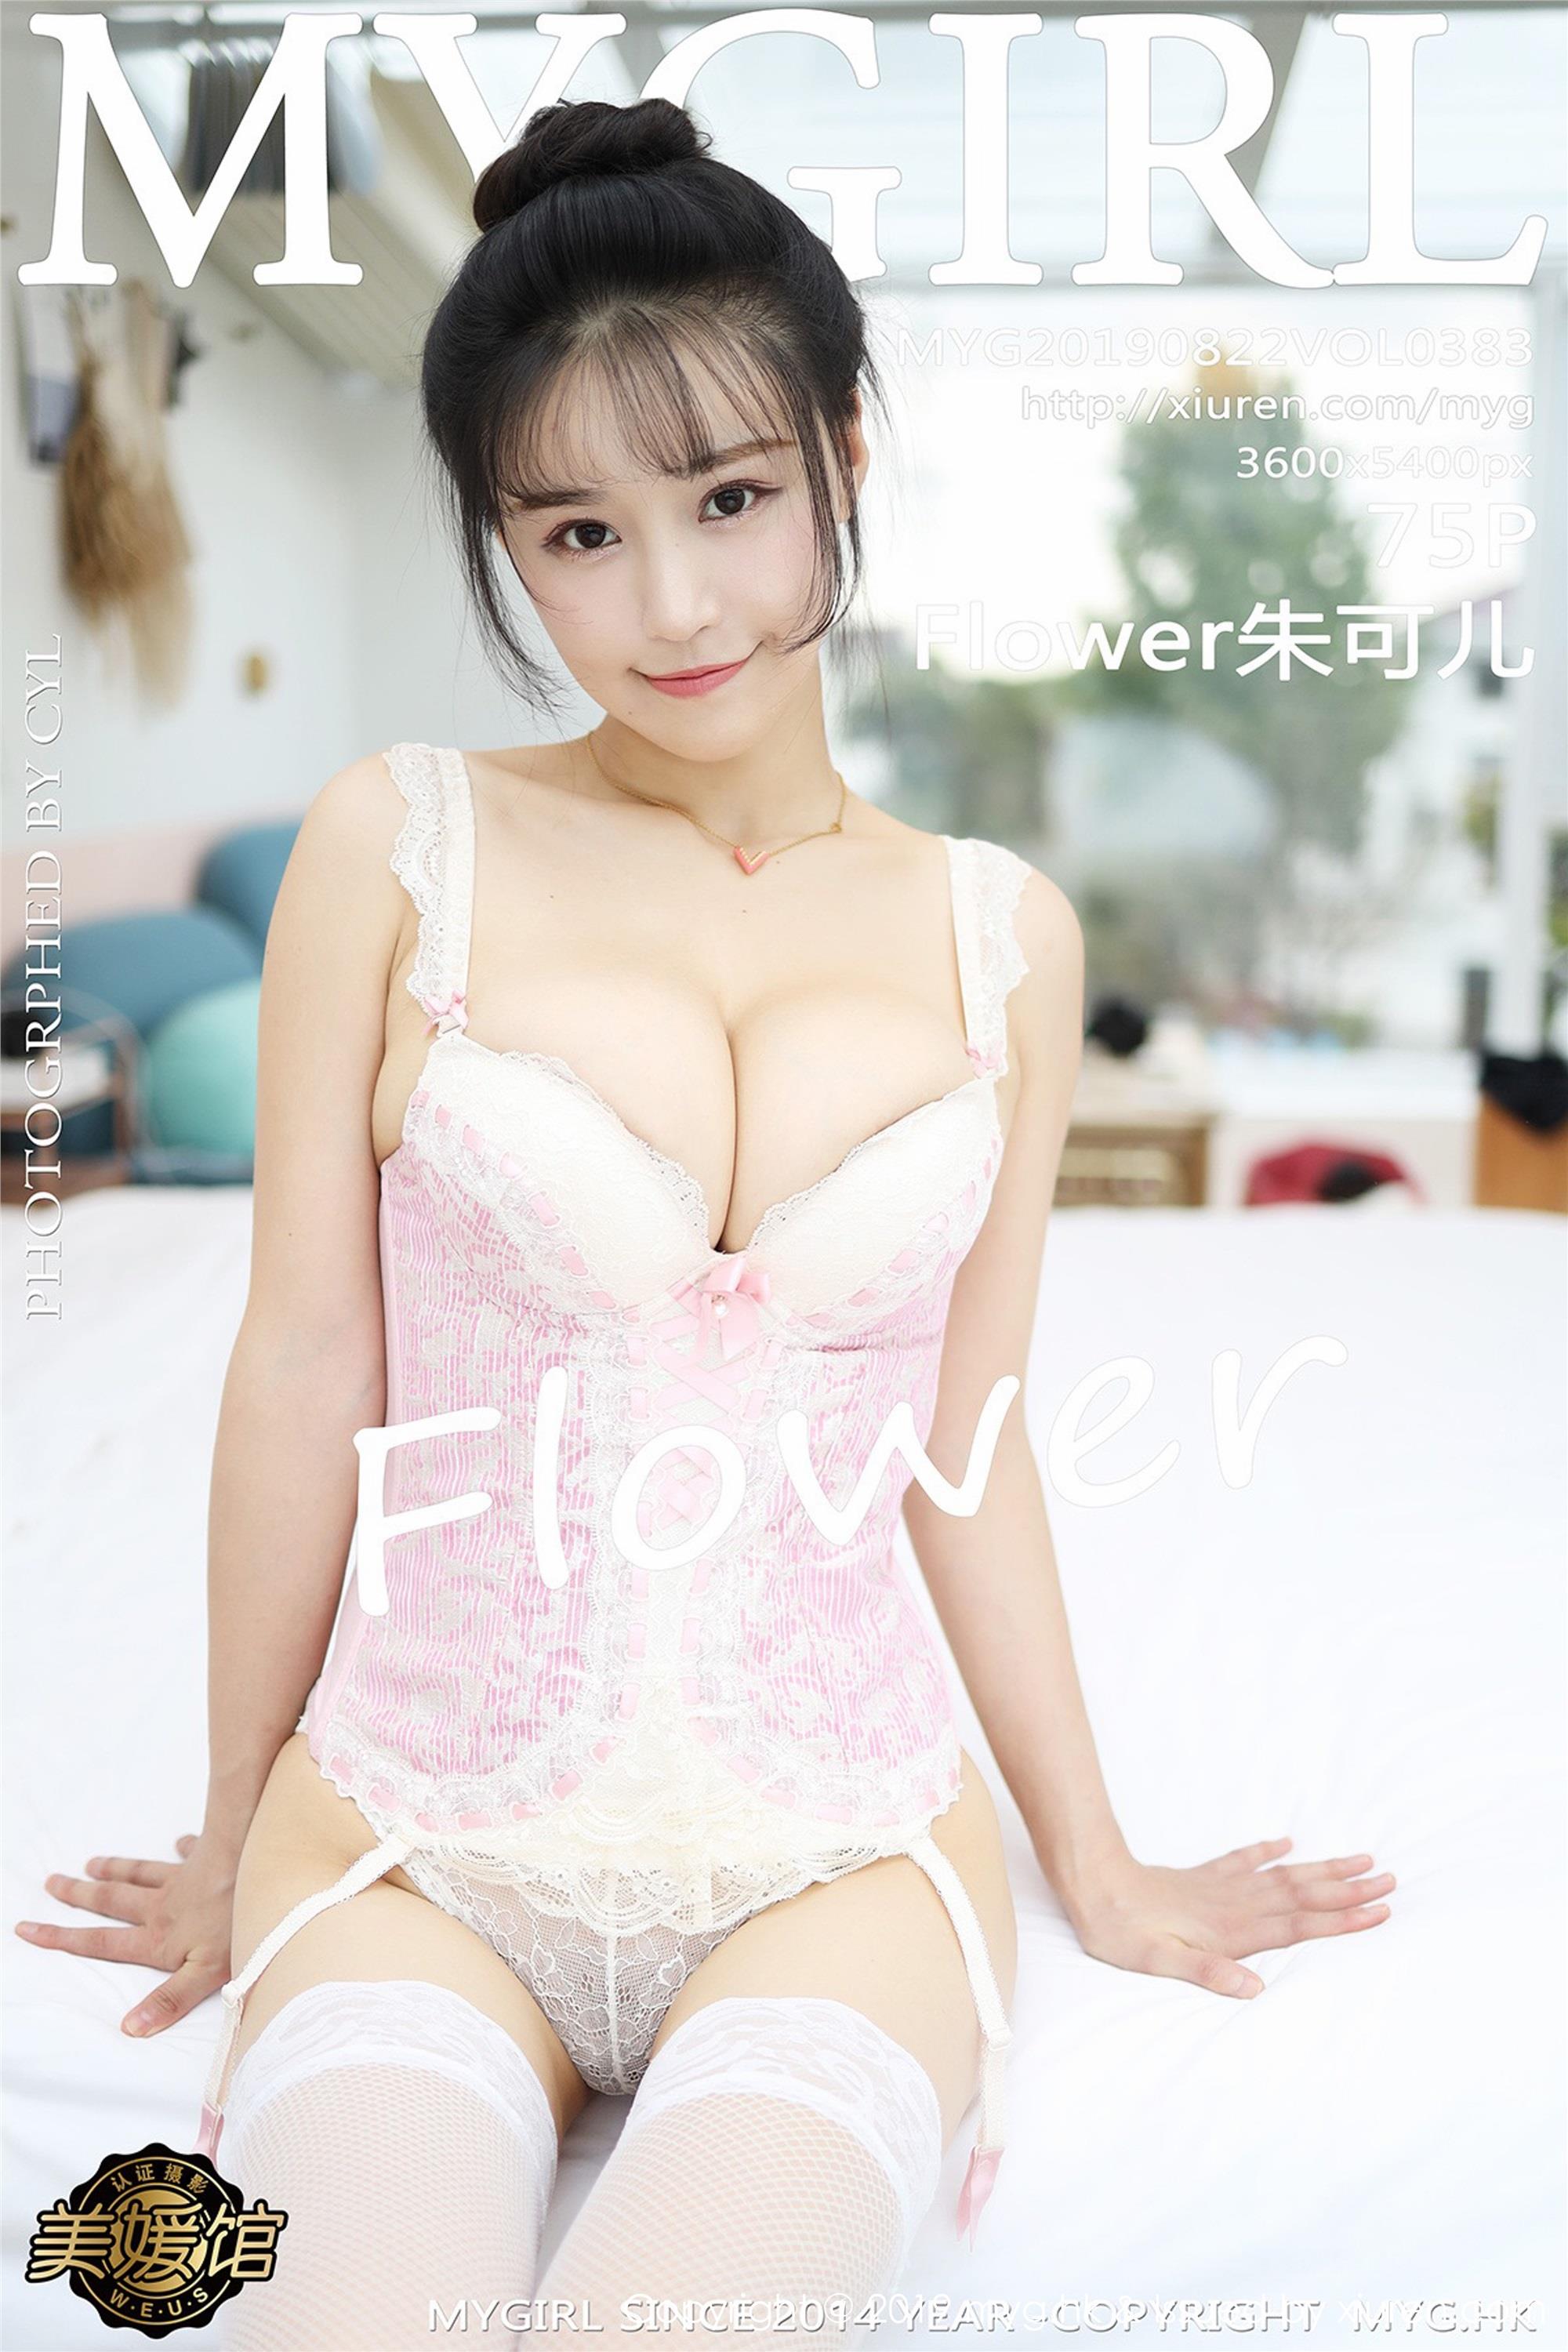 MyGirl 美媛馆新特刊 2019-08-29 Vol.385 Flower朱可儿 - 15.jpg